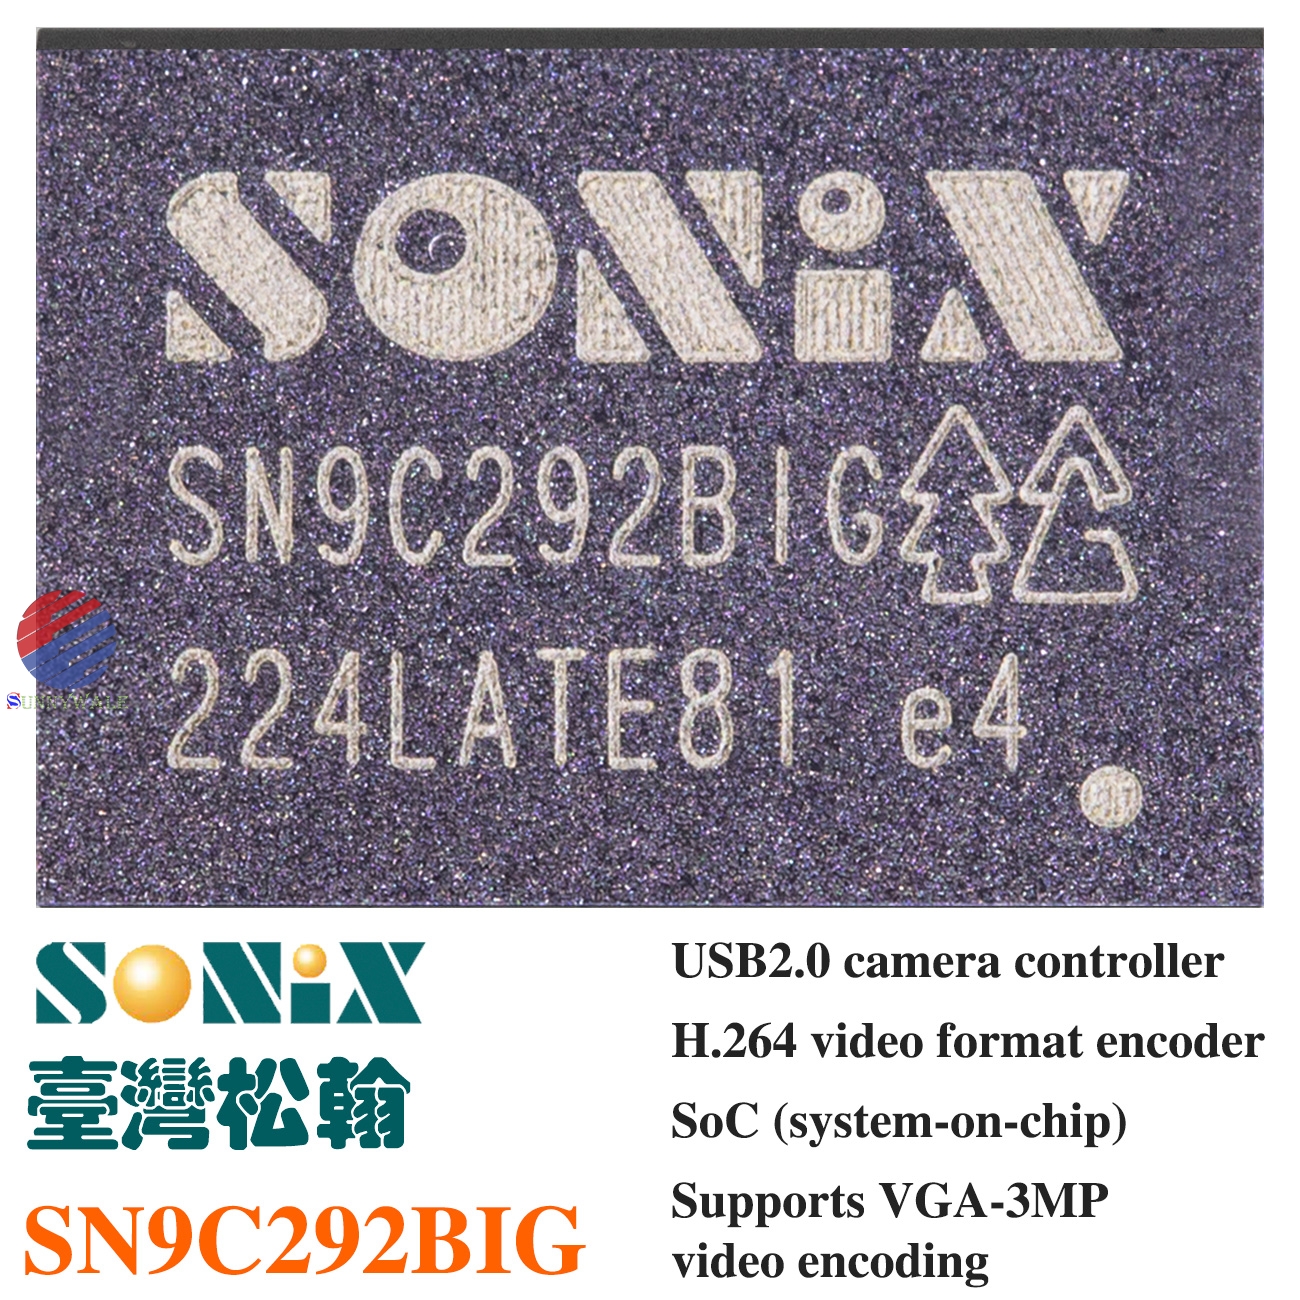 SN9C292NIG H.264 video encoder, USB2.0 camera video controller,SONIX SoC SN9C292NIG H.264 Video encoder, USB2.0 camera Video Controller, Sonix Soc SONIX SoC system chip, support VGA-3MP video encoding